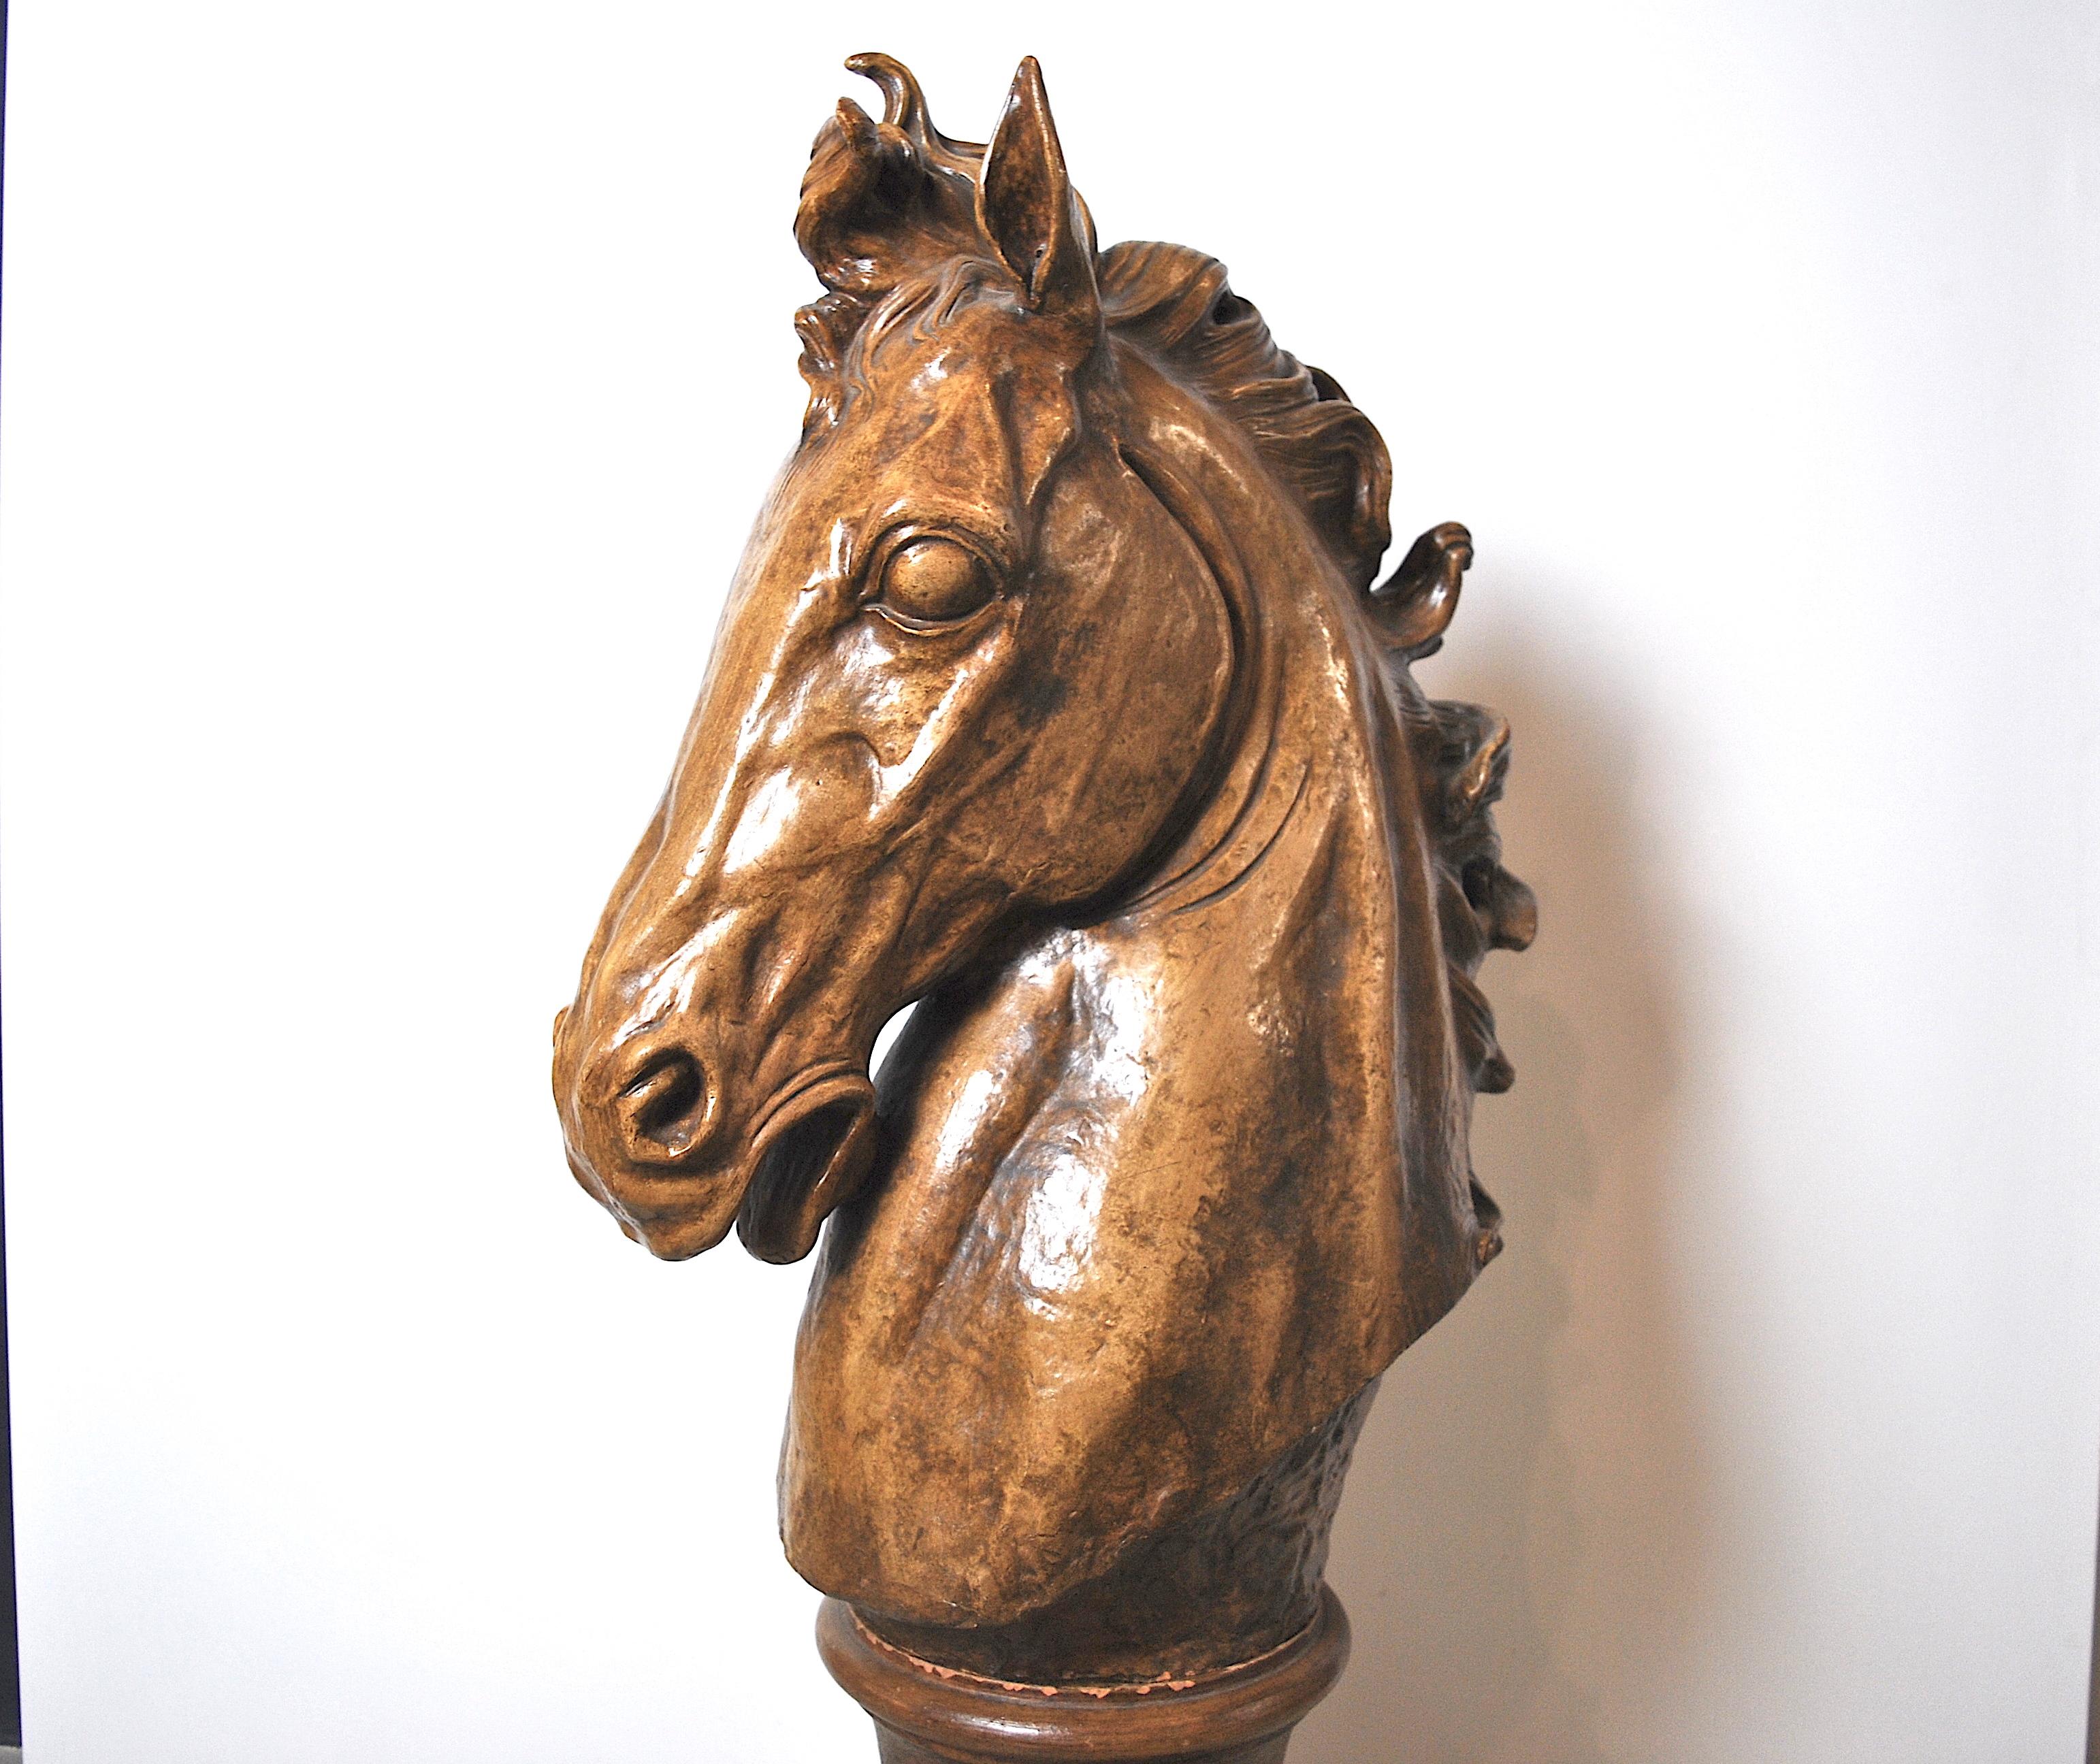 Wonderful midcentury ceramic sculpture of a horse head, typical Italian manufacture.